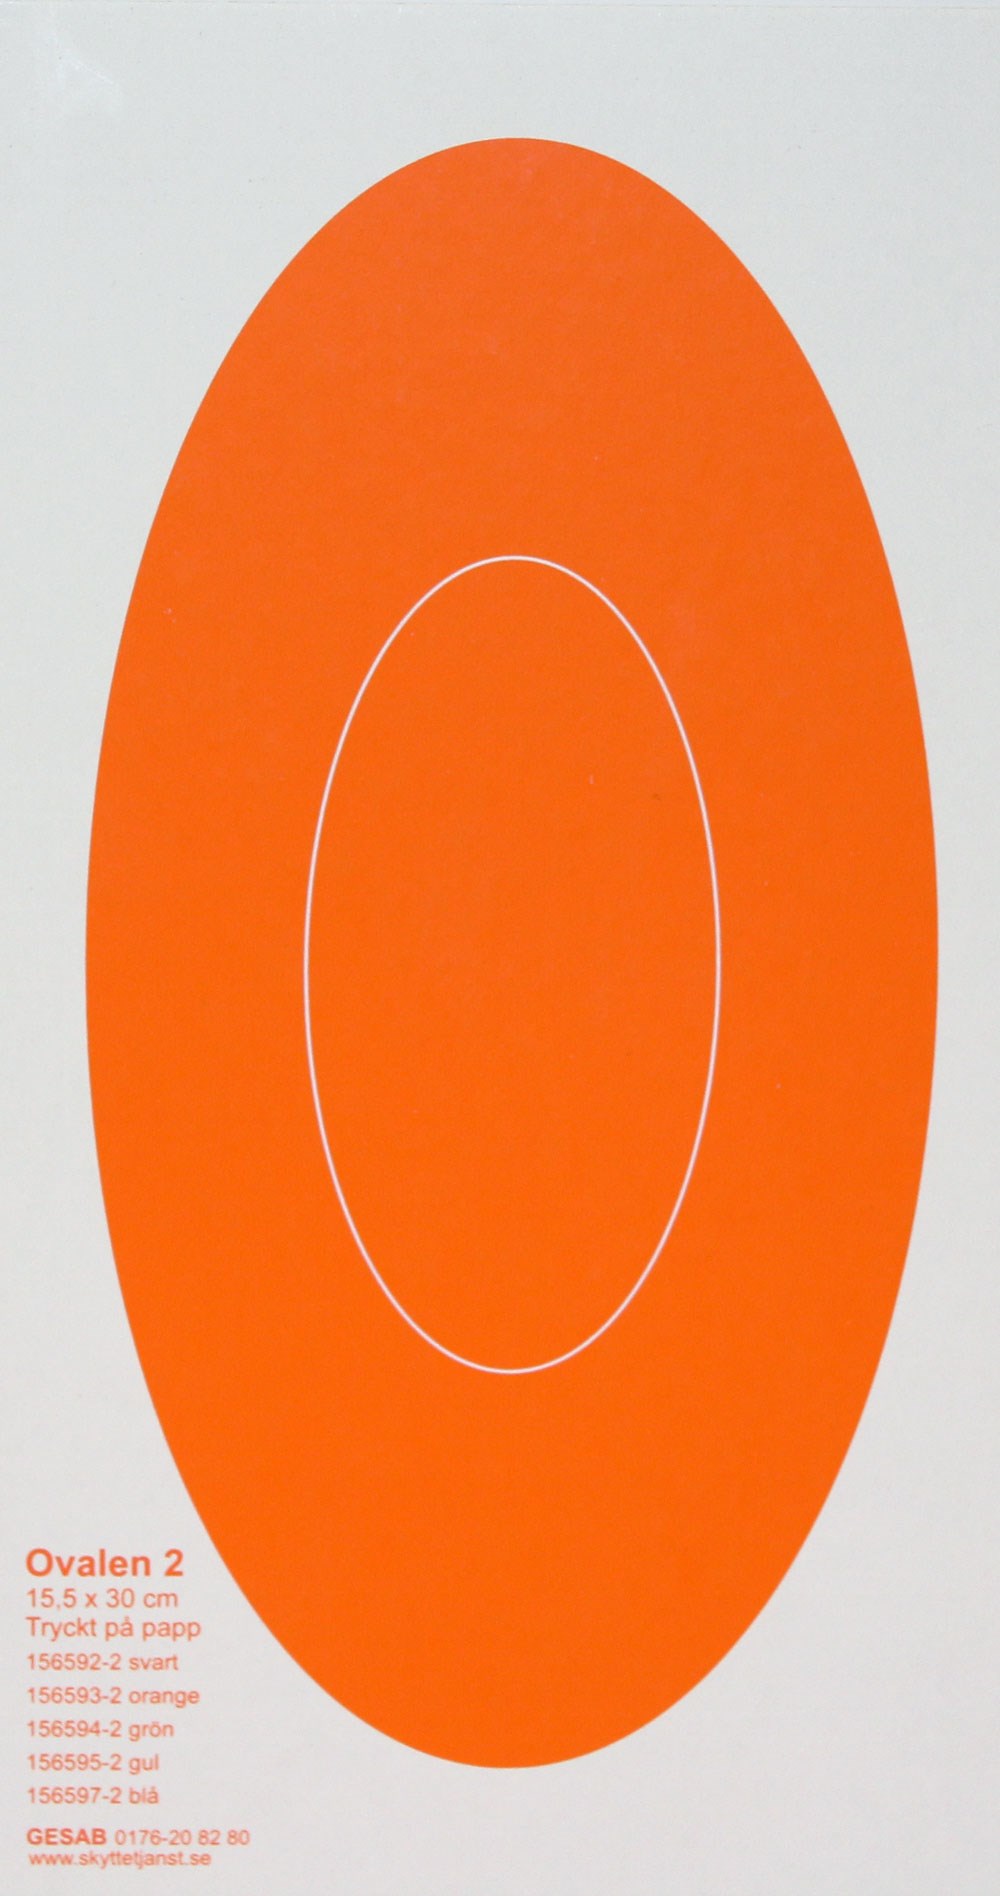 Ovalen nr 2 orange,15,5 x 30 cm